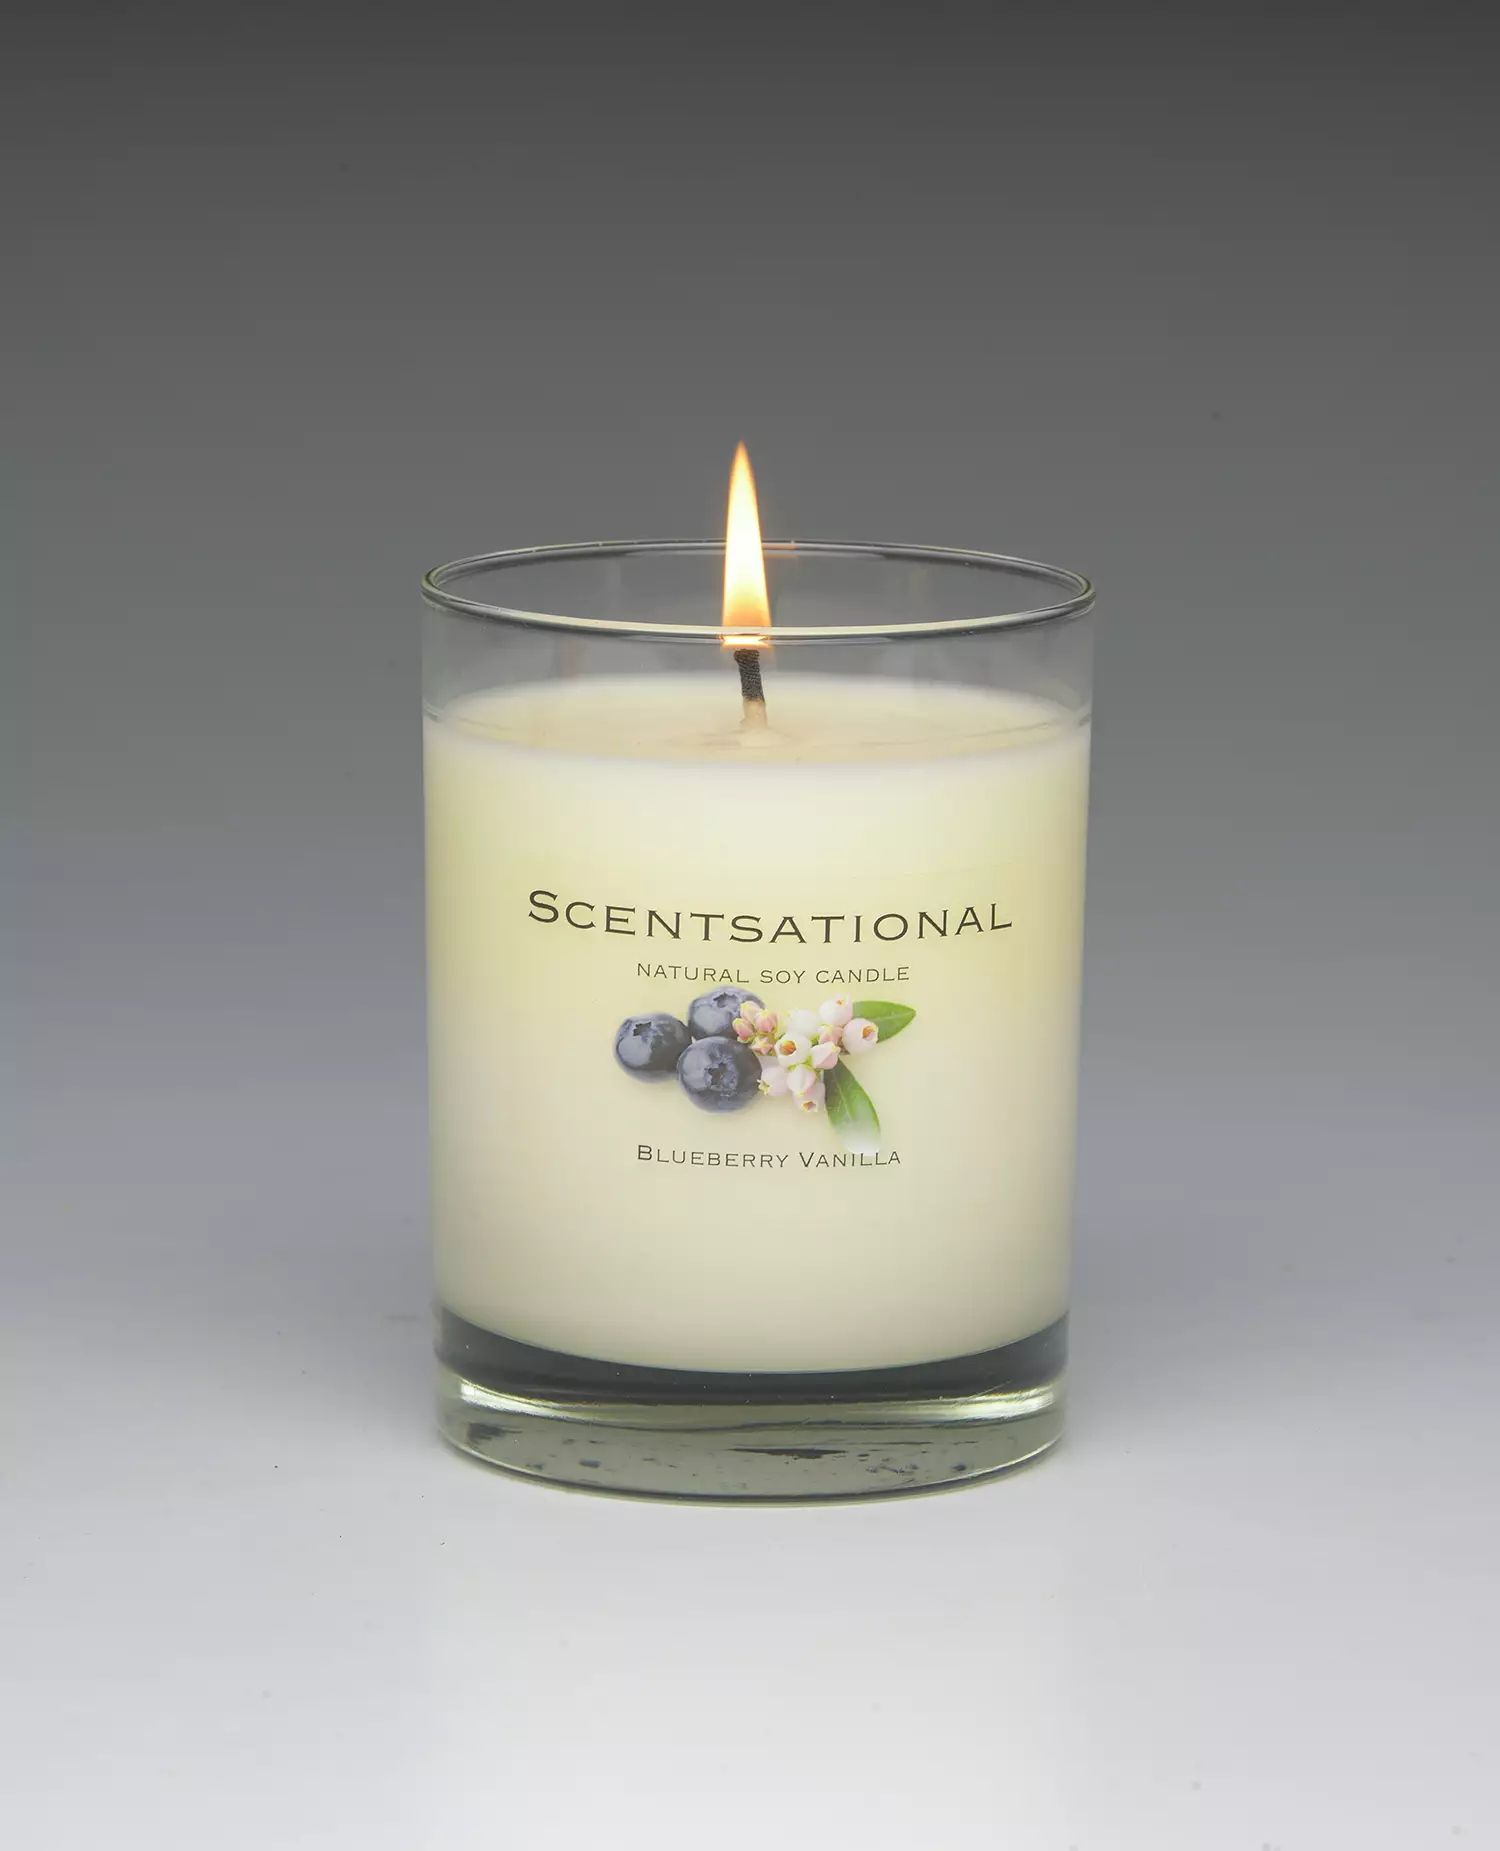 Blueberry Vanilla – 11oz scented candle burning